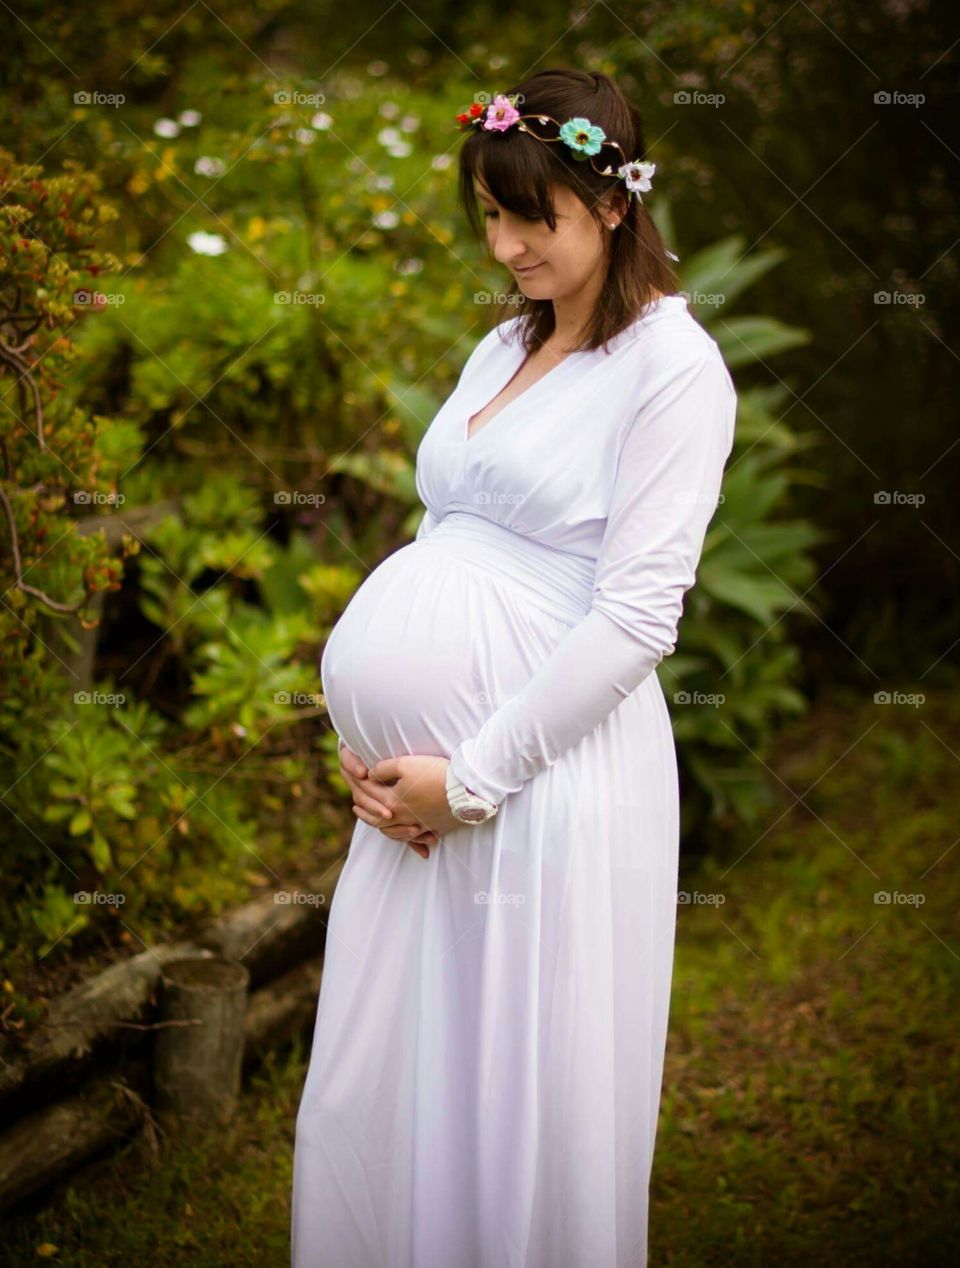 pregnancy third trimester